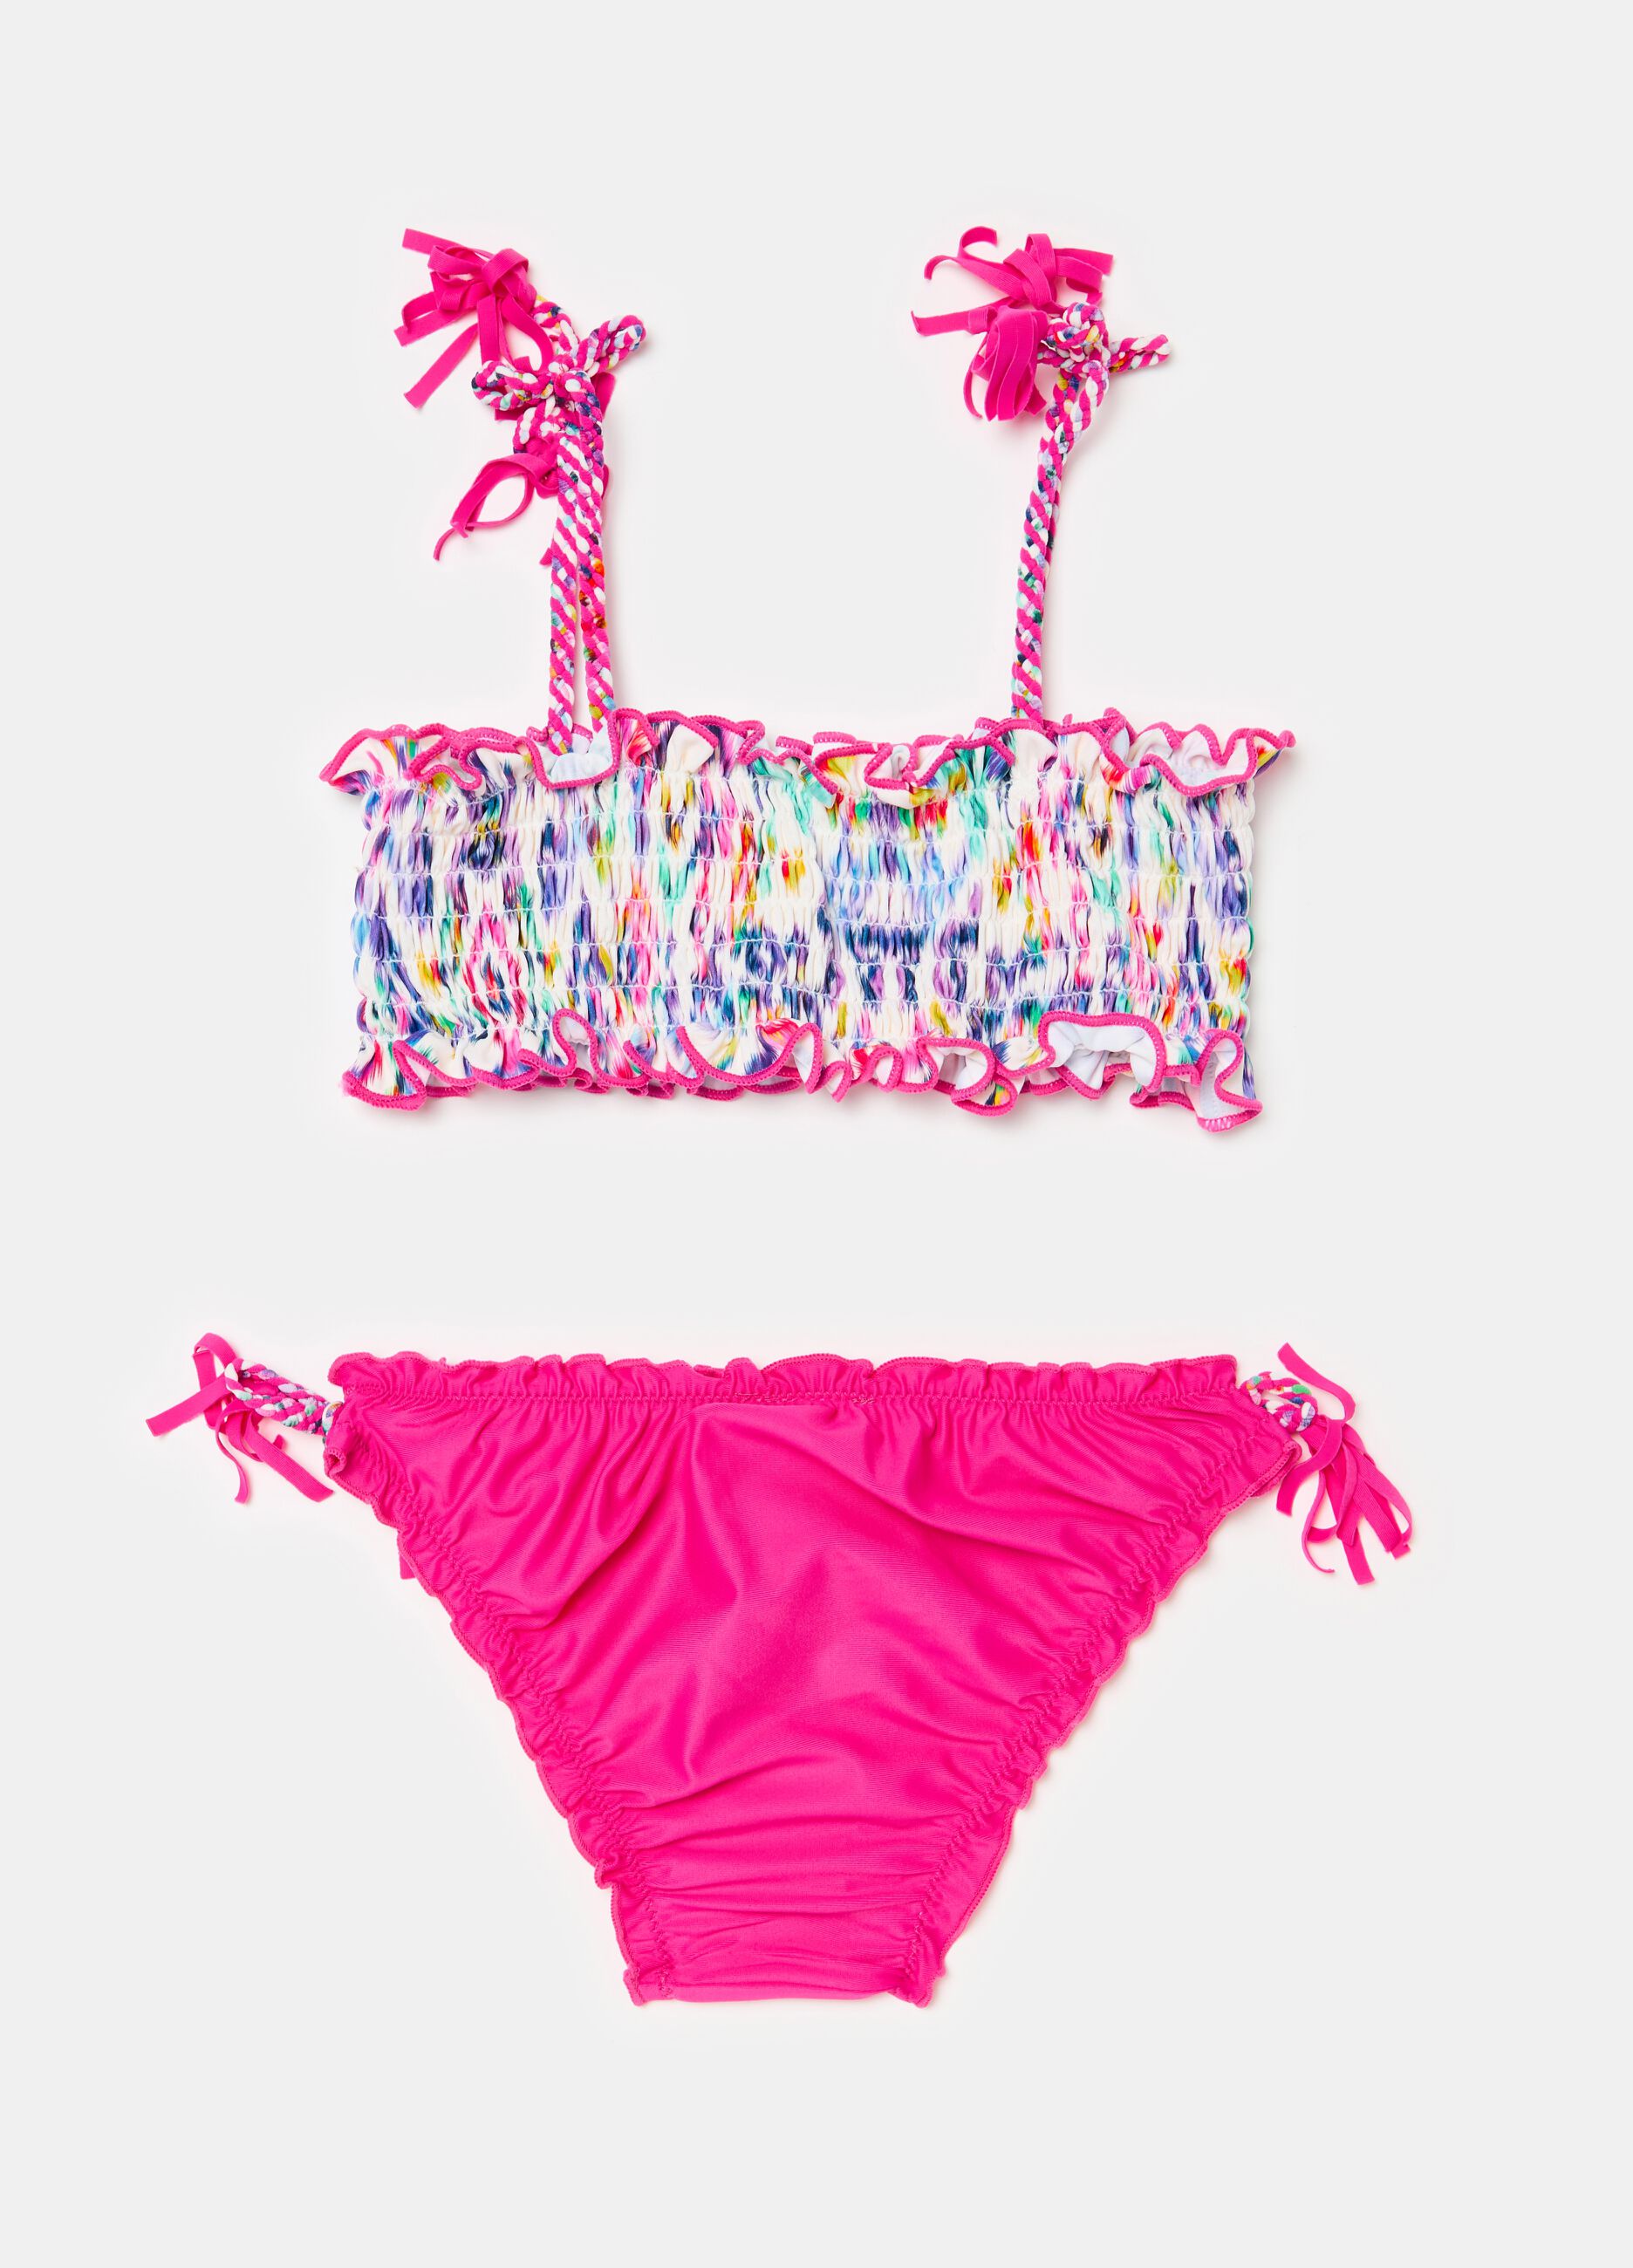 Bikini with tie-dye pattern and tassels